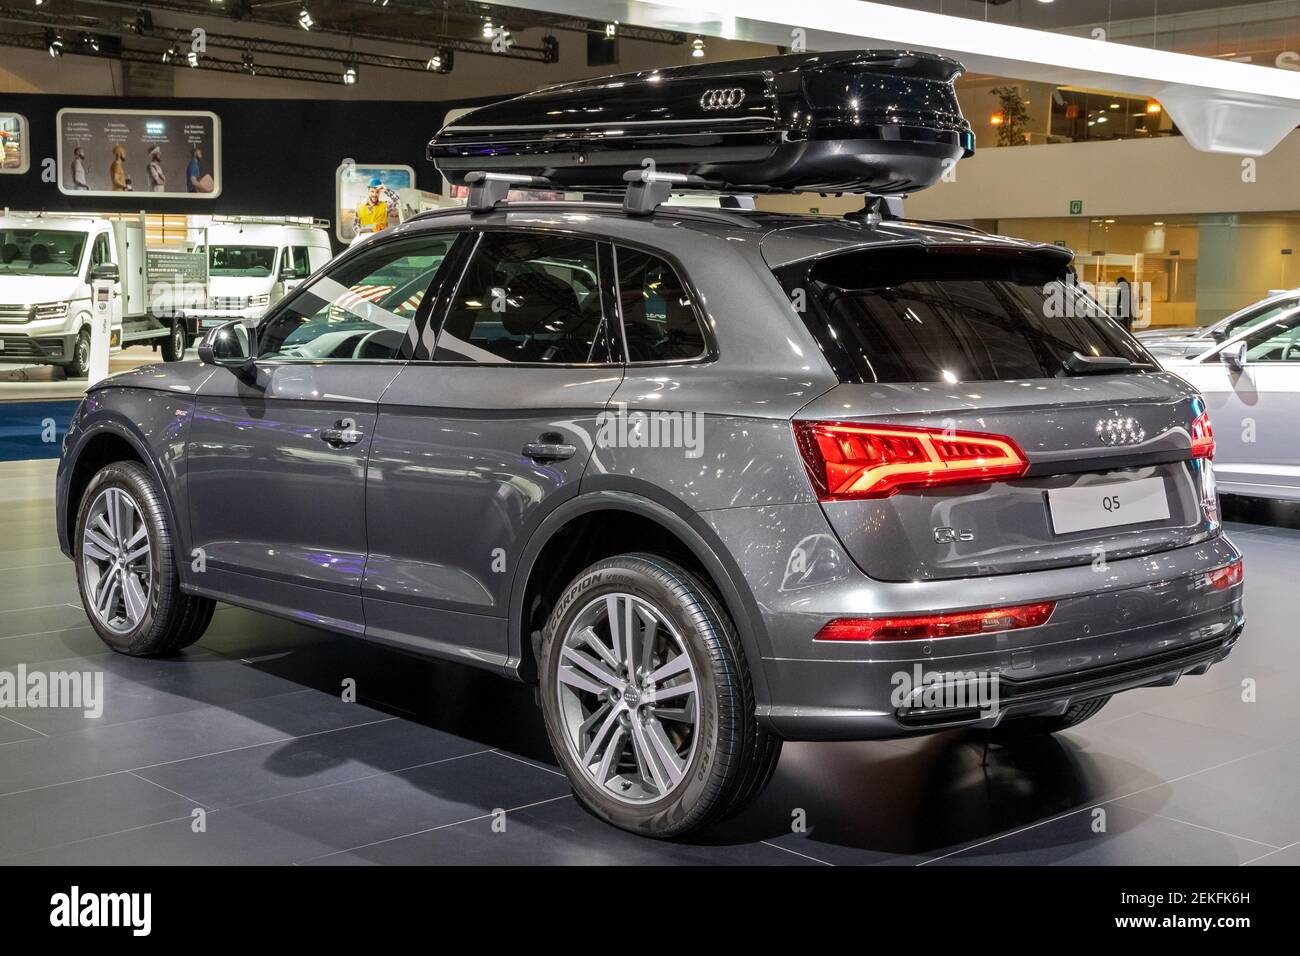 Audi Q5 car showcased at the Brussels Autosalon Motor Show. Belgium - January 18, 2019. Stock Photo